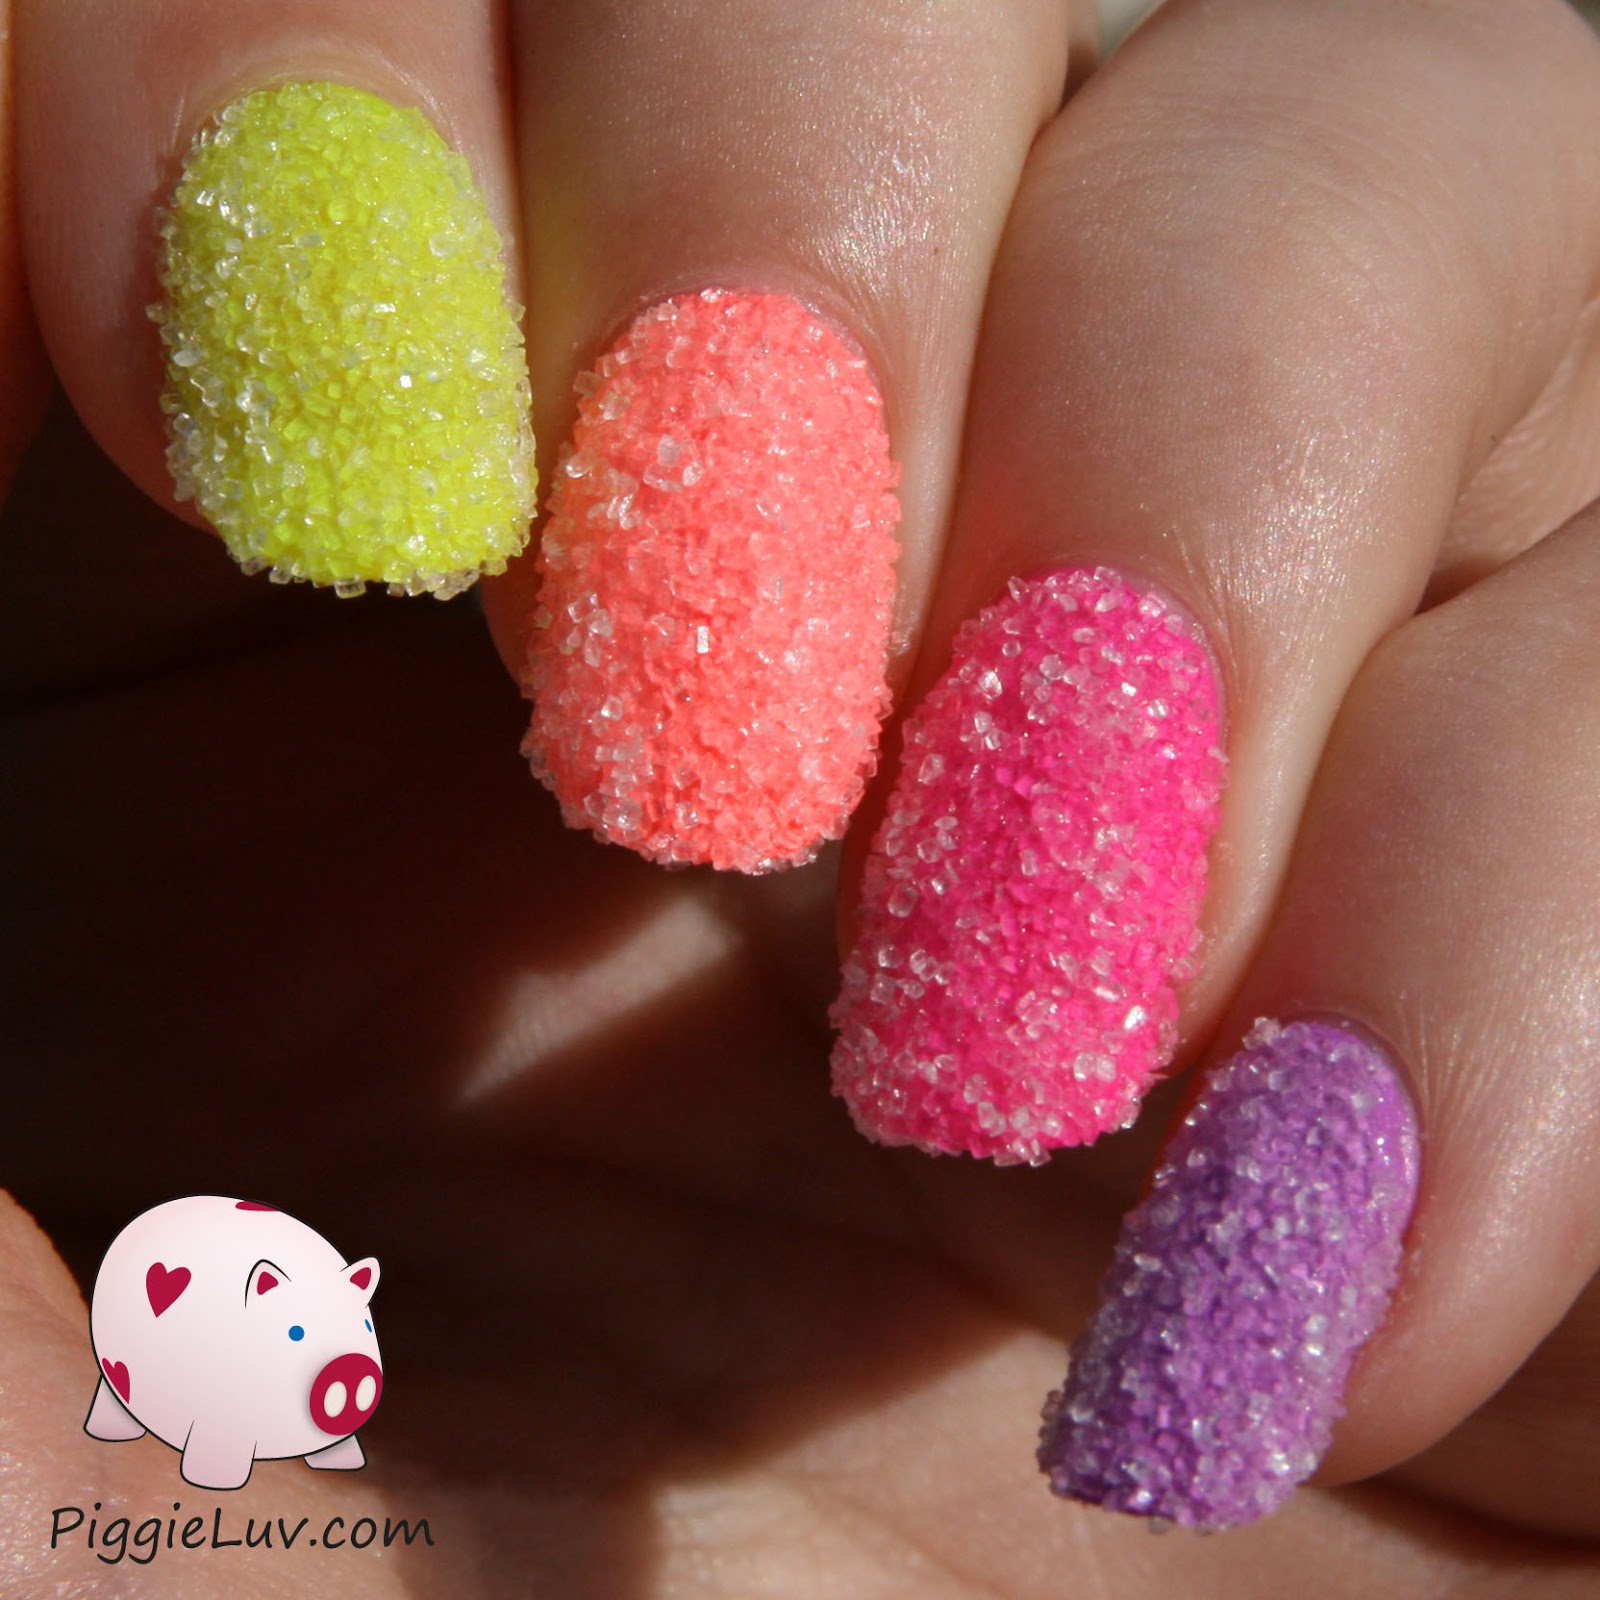 PiggieLuv: Sugar candy nail art